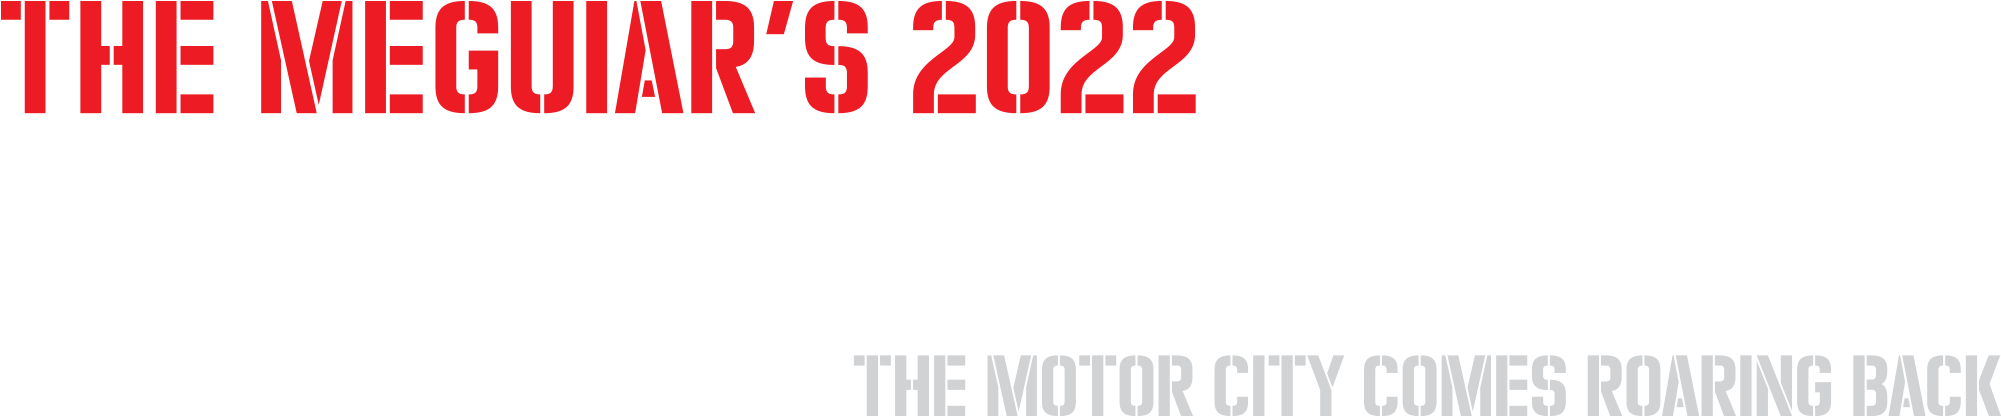 The Meguiar’s 2022 Detroit Autorama The Motor City Comes Roaring Back